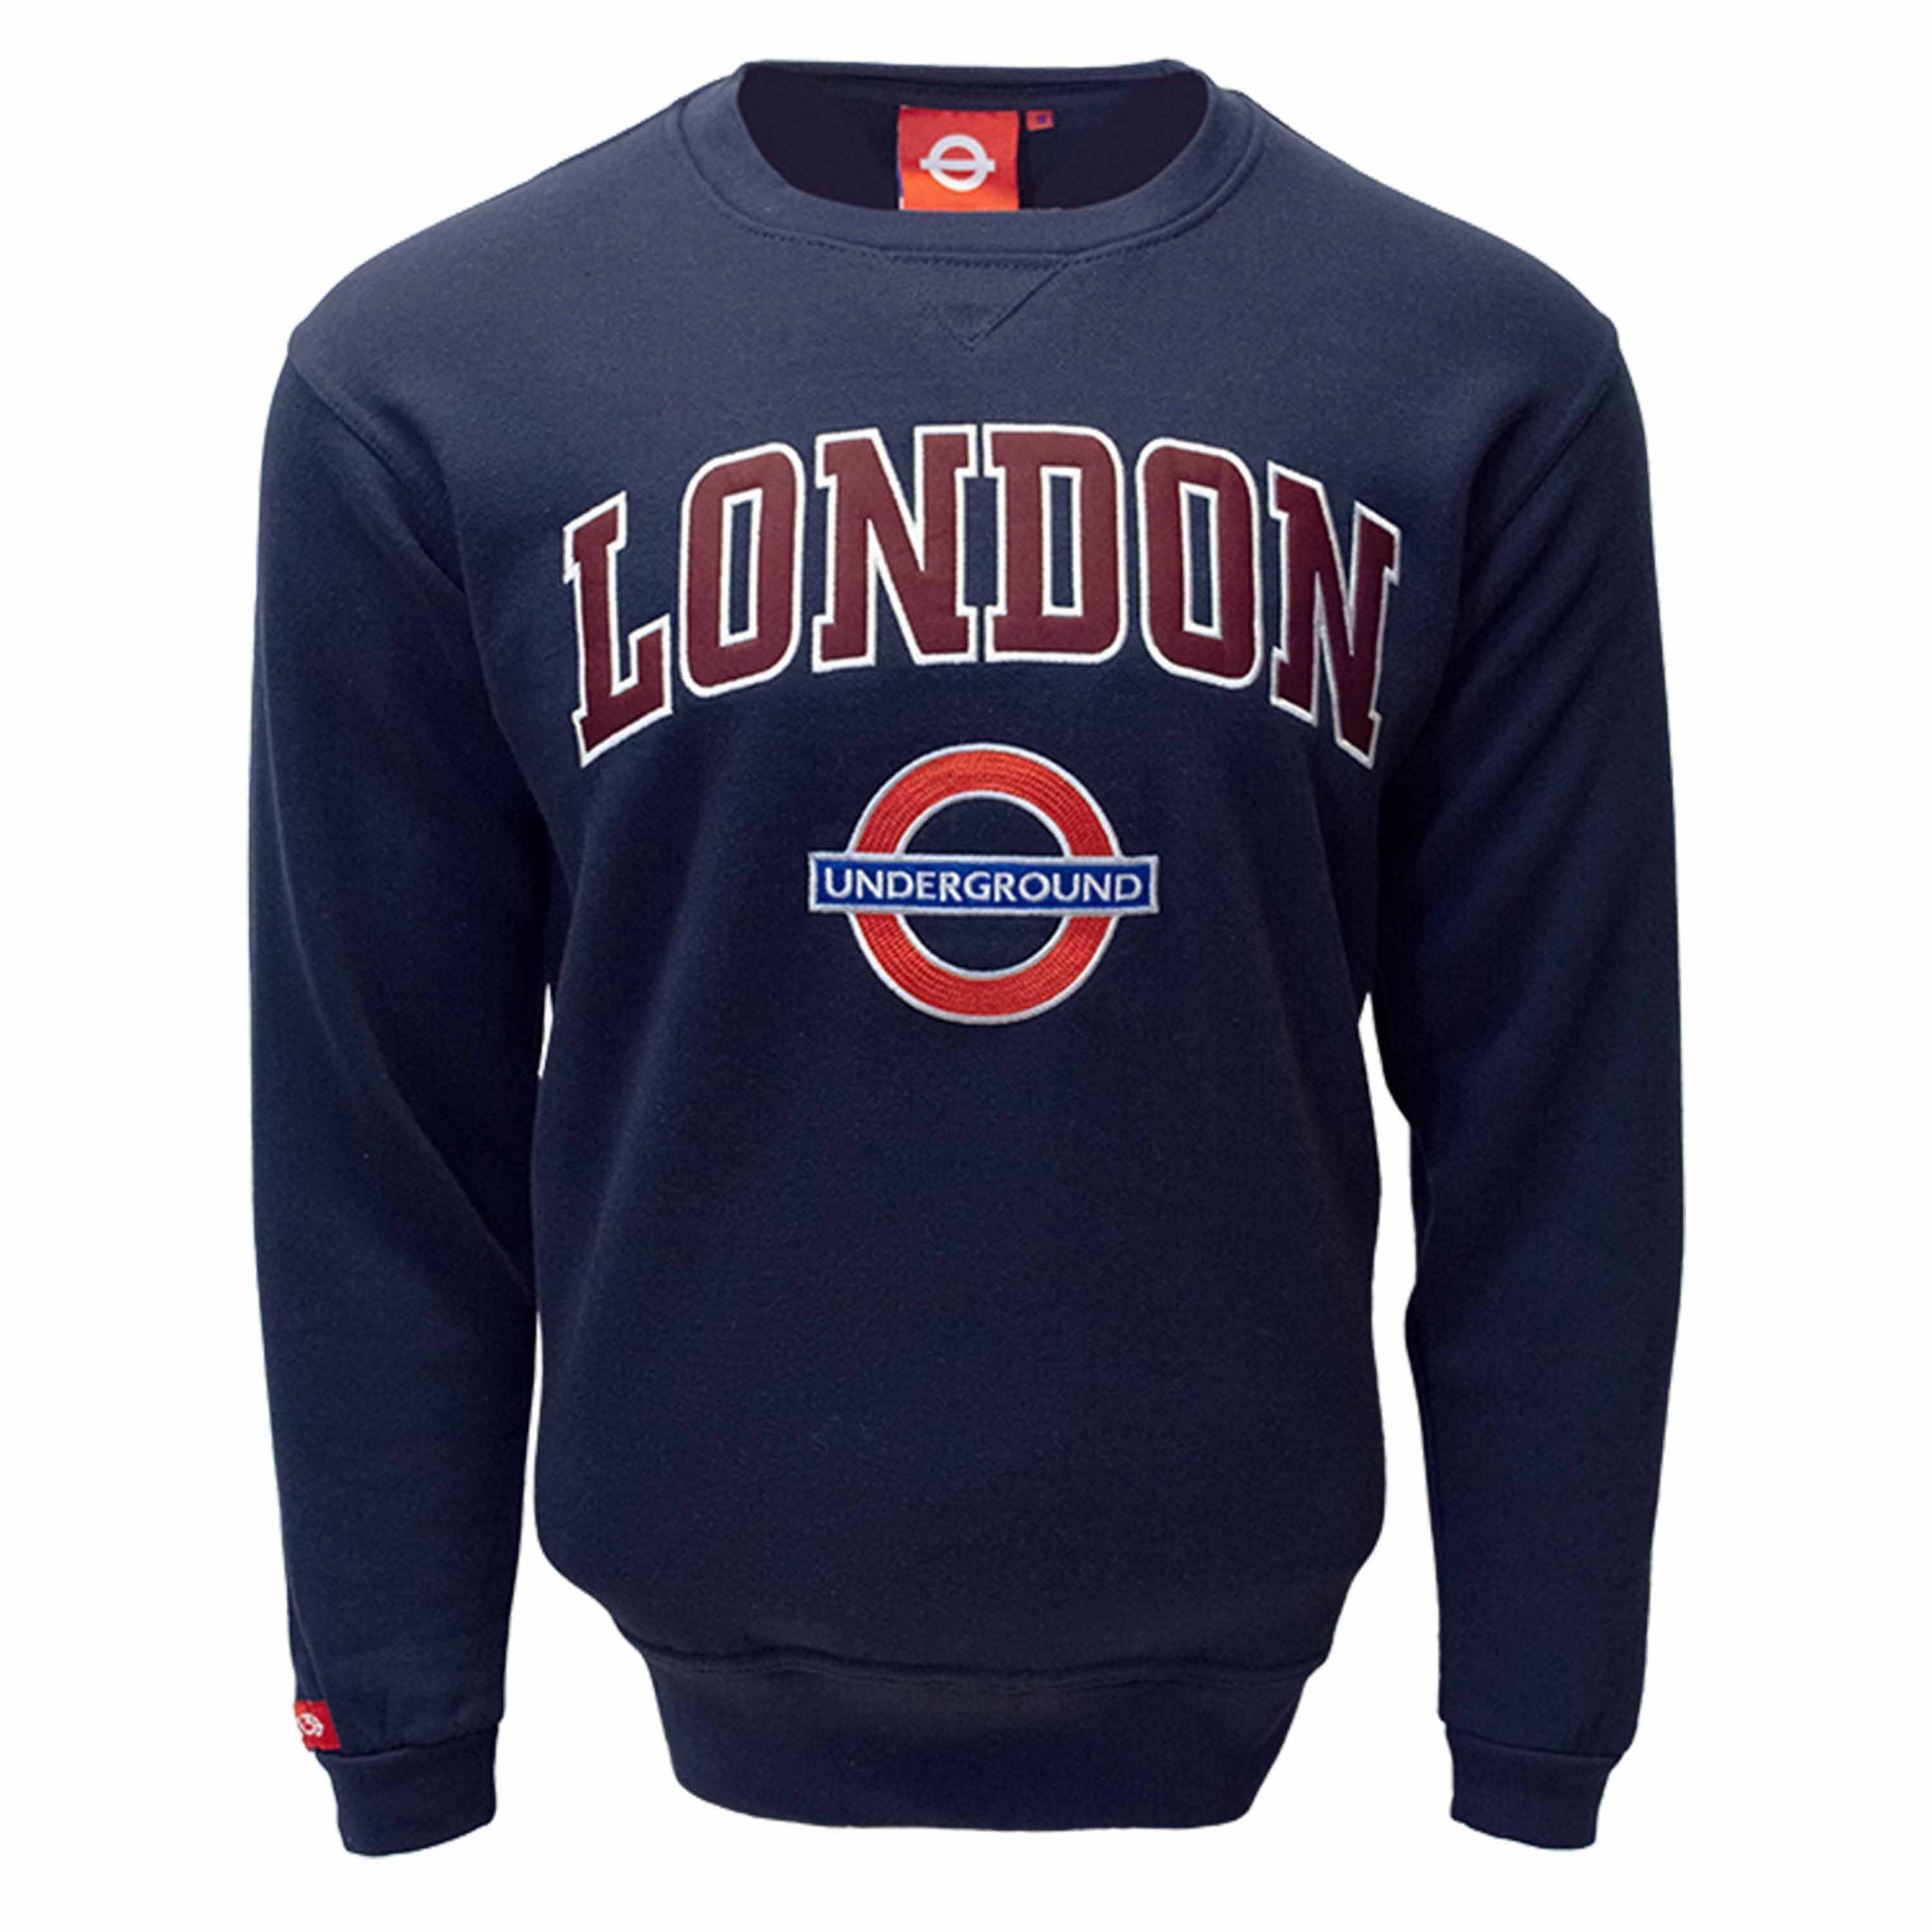 London Underground Navy and Maroon Sweatshirt - Unisex - British Gifts